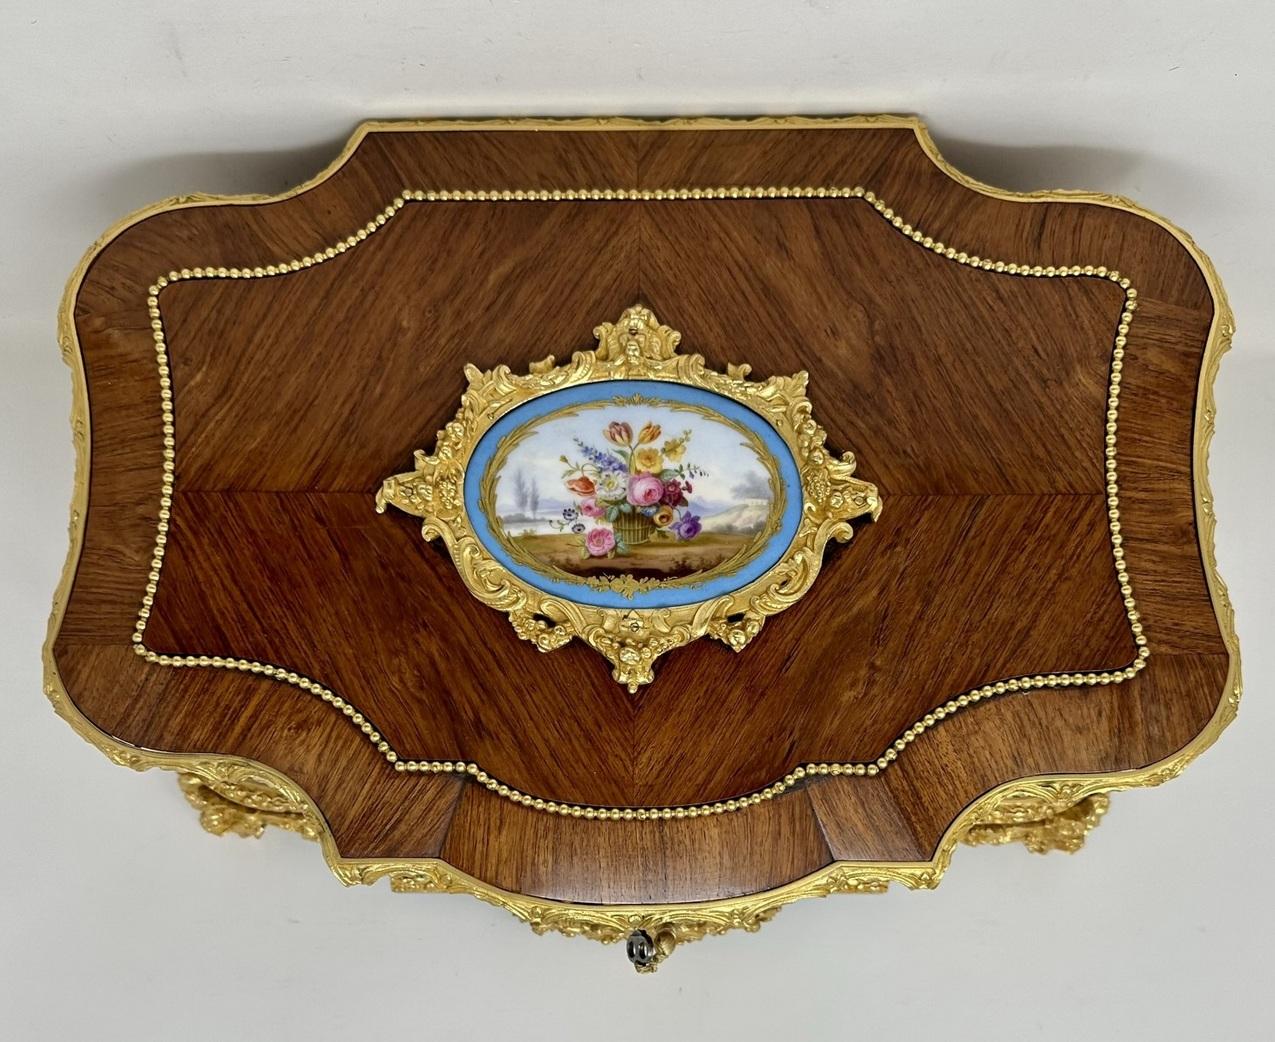 Brass Antique French Ormolu Kingwood Sevres Casket Jewelry Box by Vervelle Audot Paris